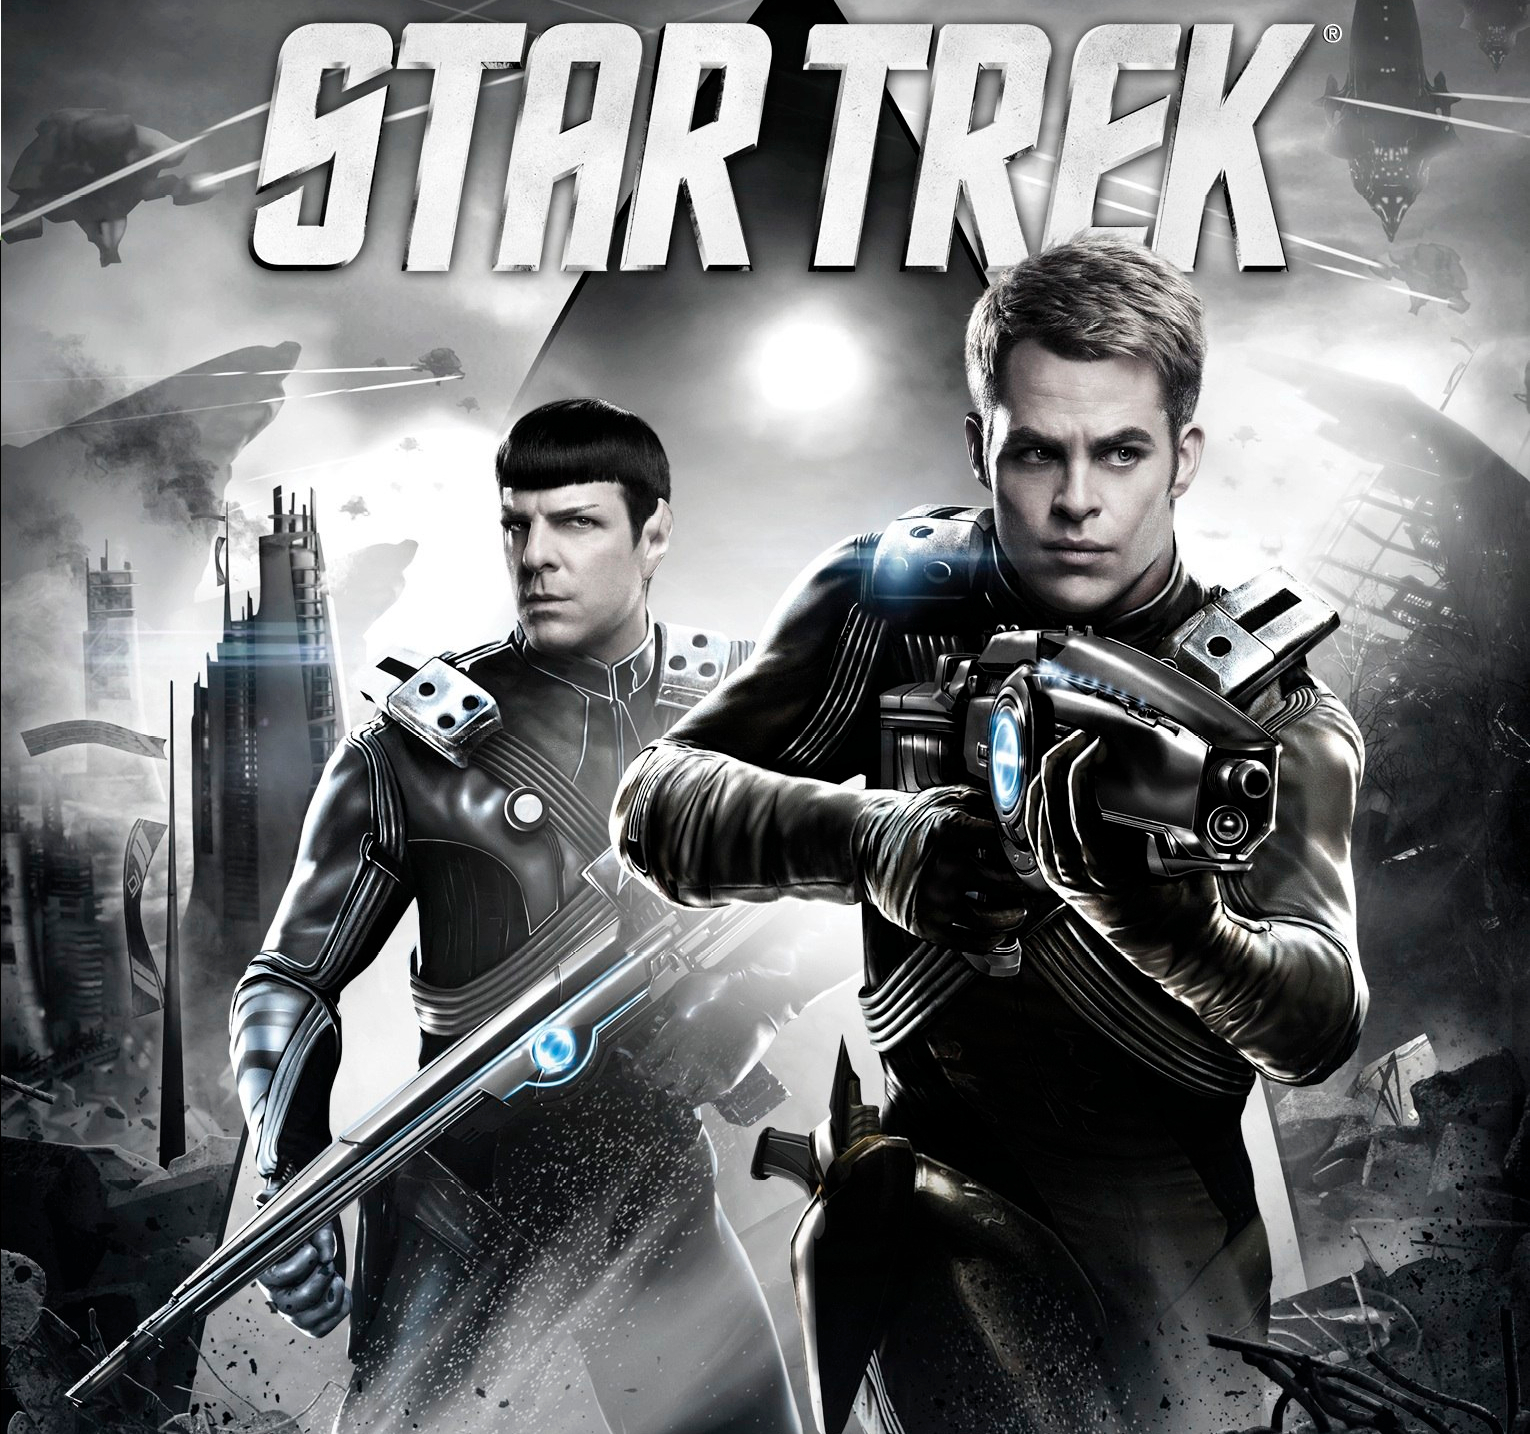 Star Trek uscirà il 23 aprile 2013